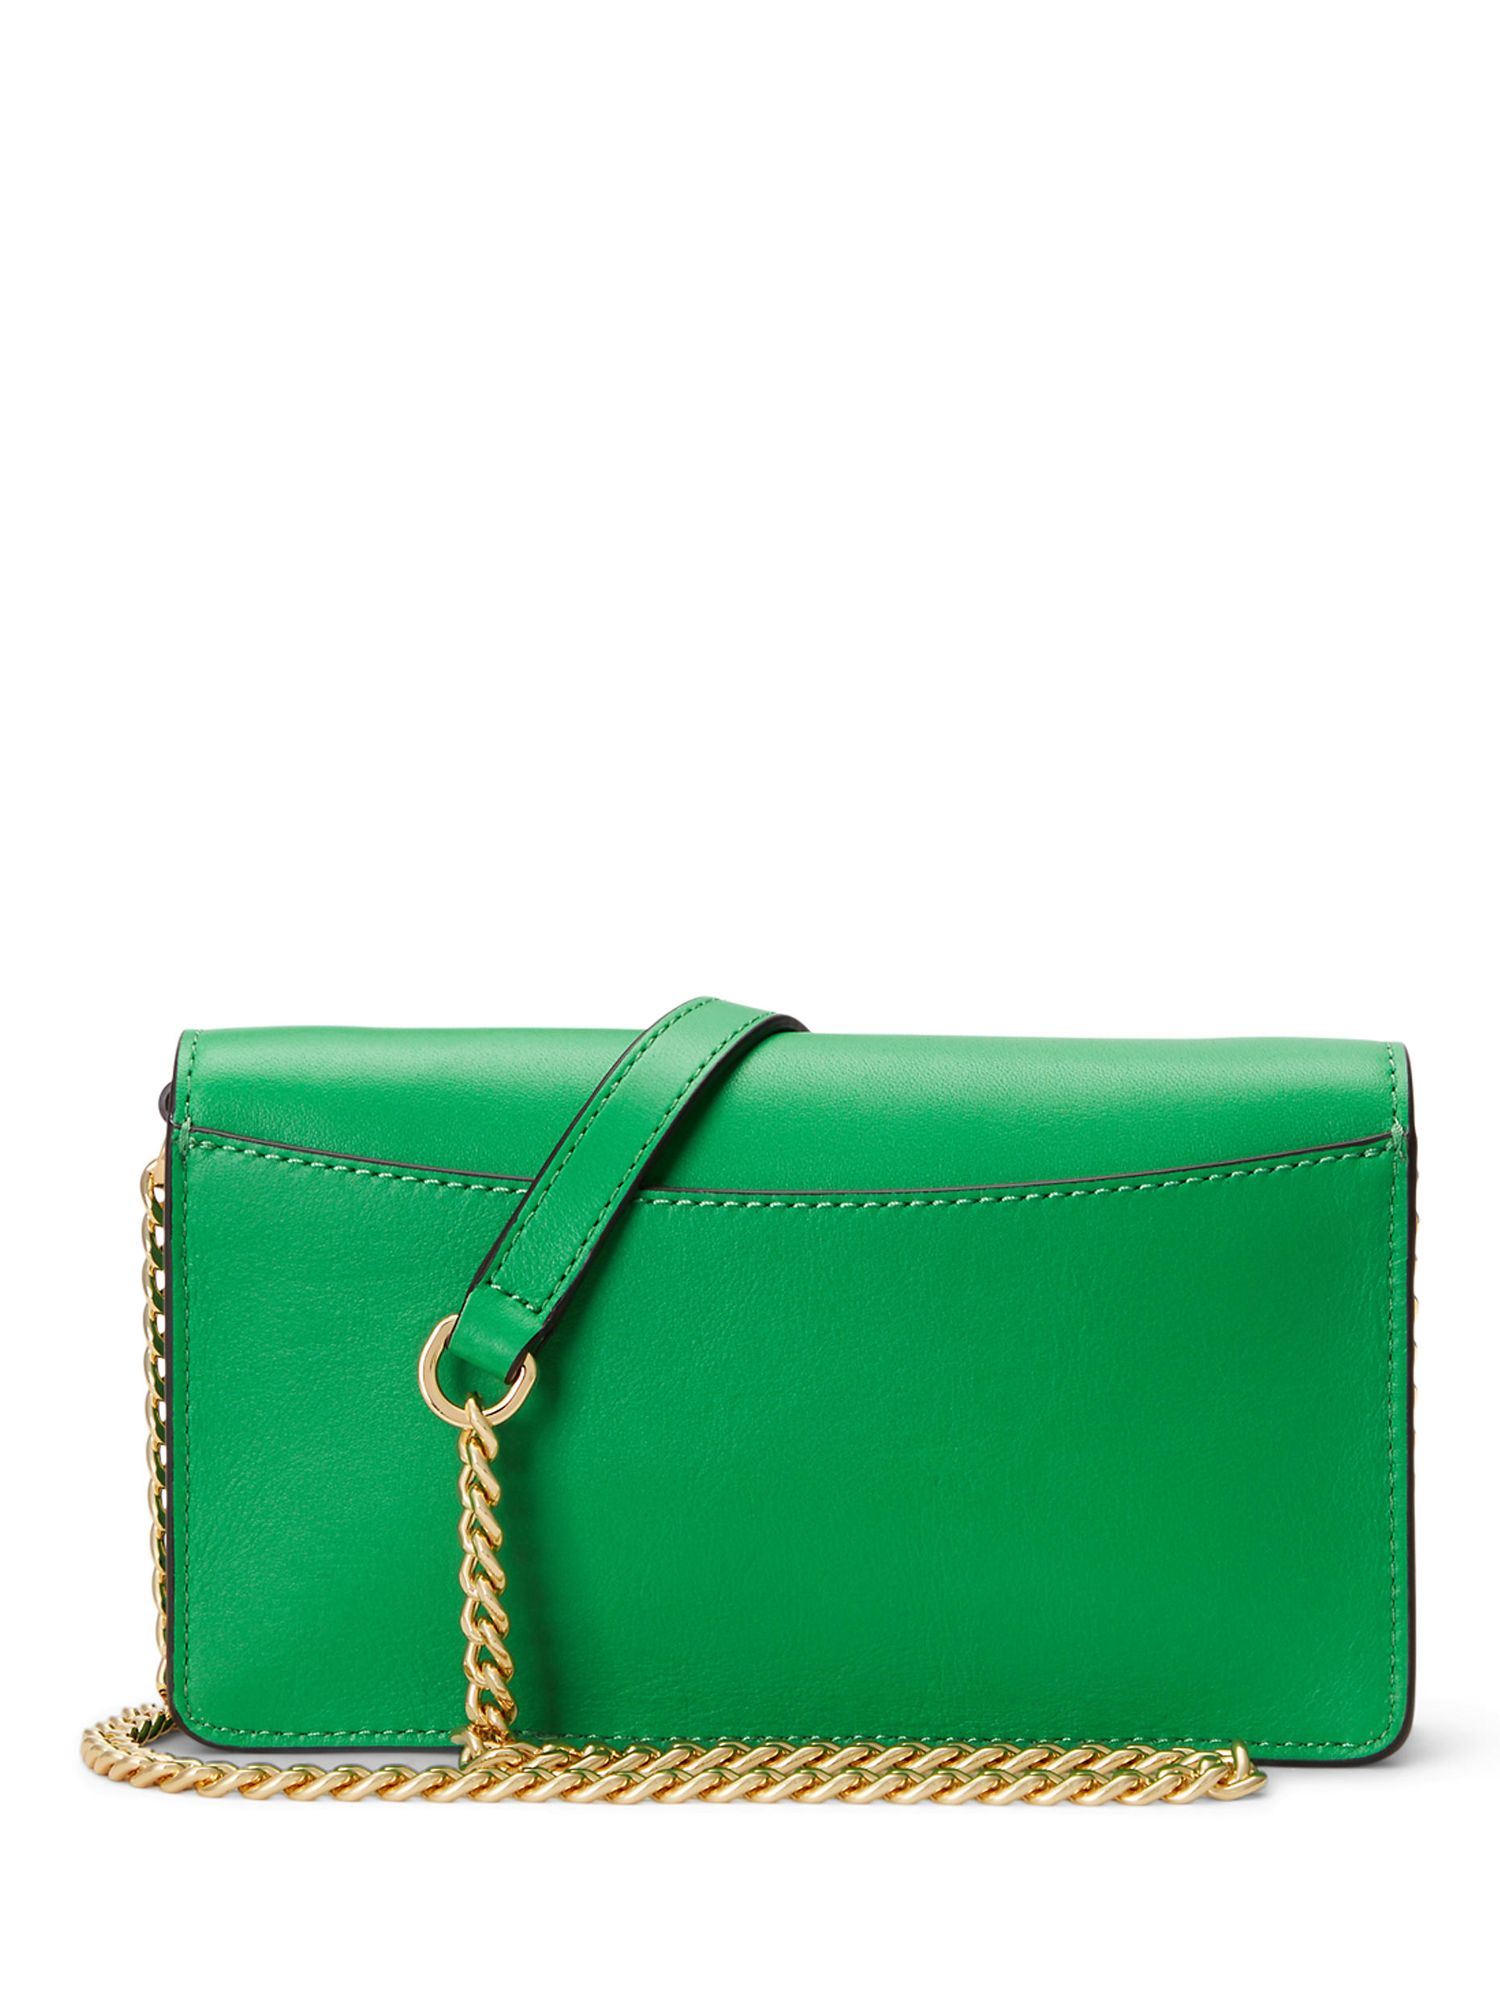 Buy Lauren Ralph Lauren Leather Chain Strap Cross Body Tech Case Bag, Green Topaz Online at johnlewis.com